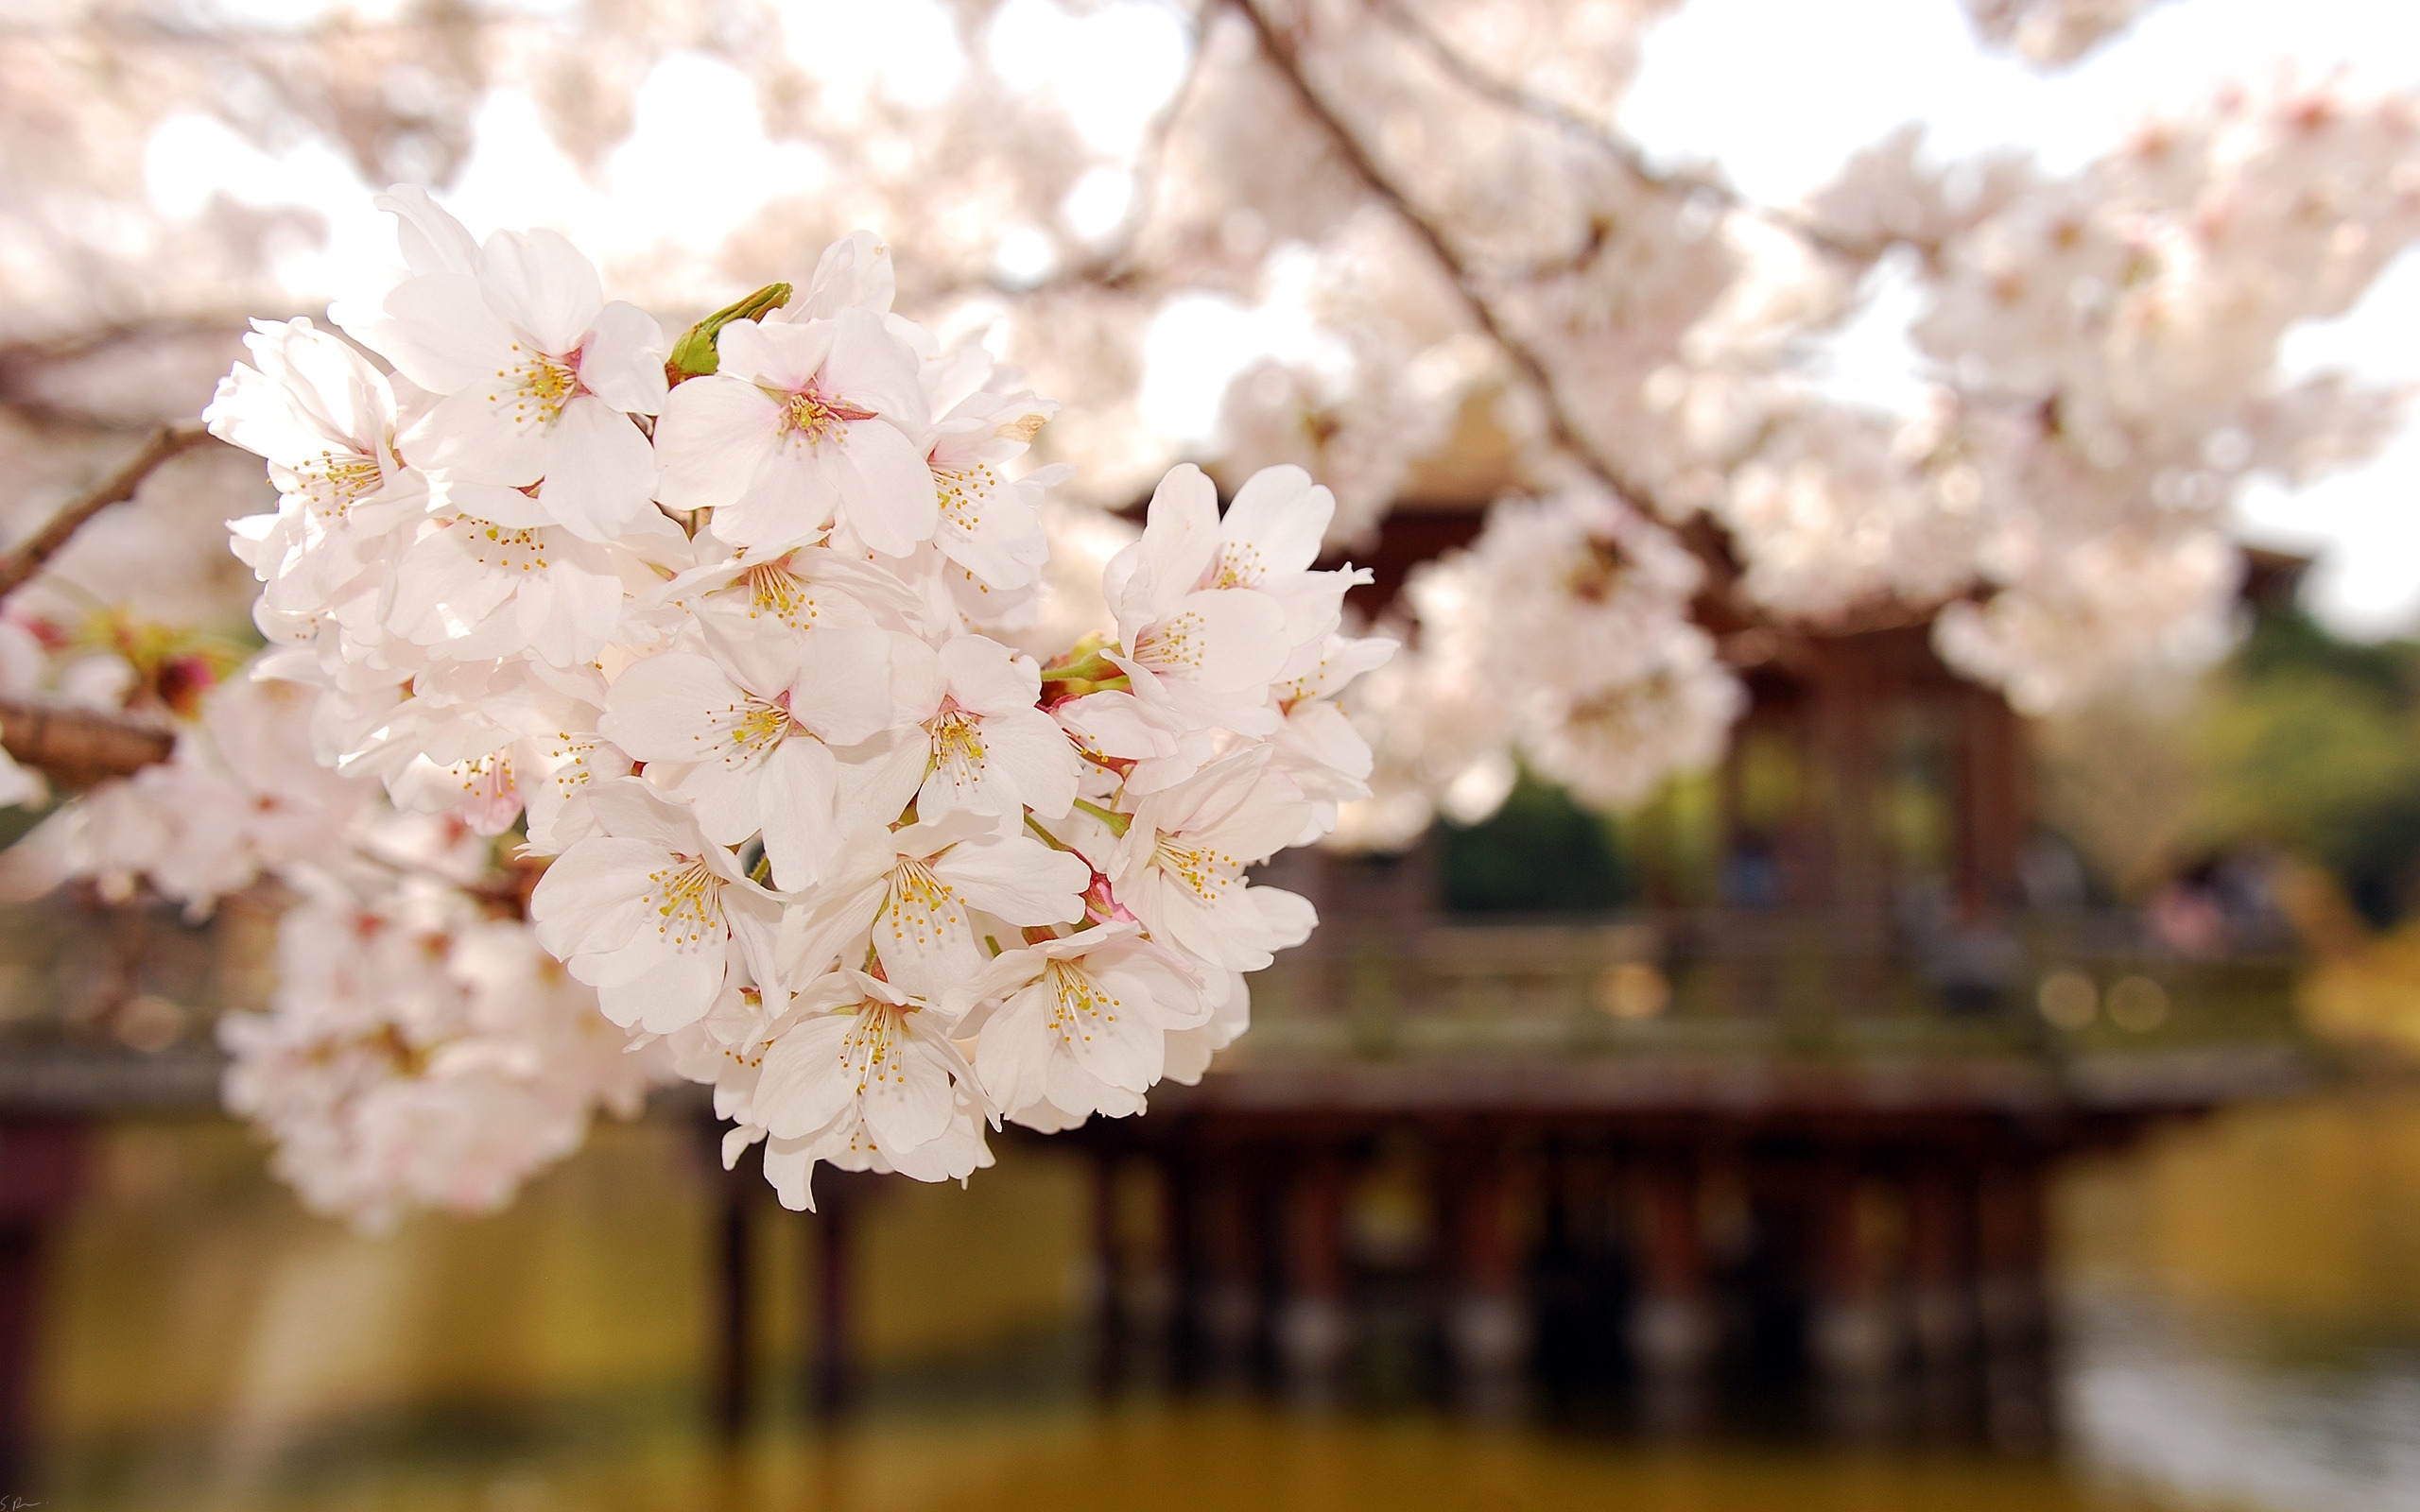 Baixar papel de parede para celular de Plantas, Flores, Sakura gratuito.